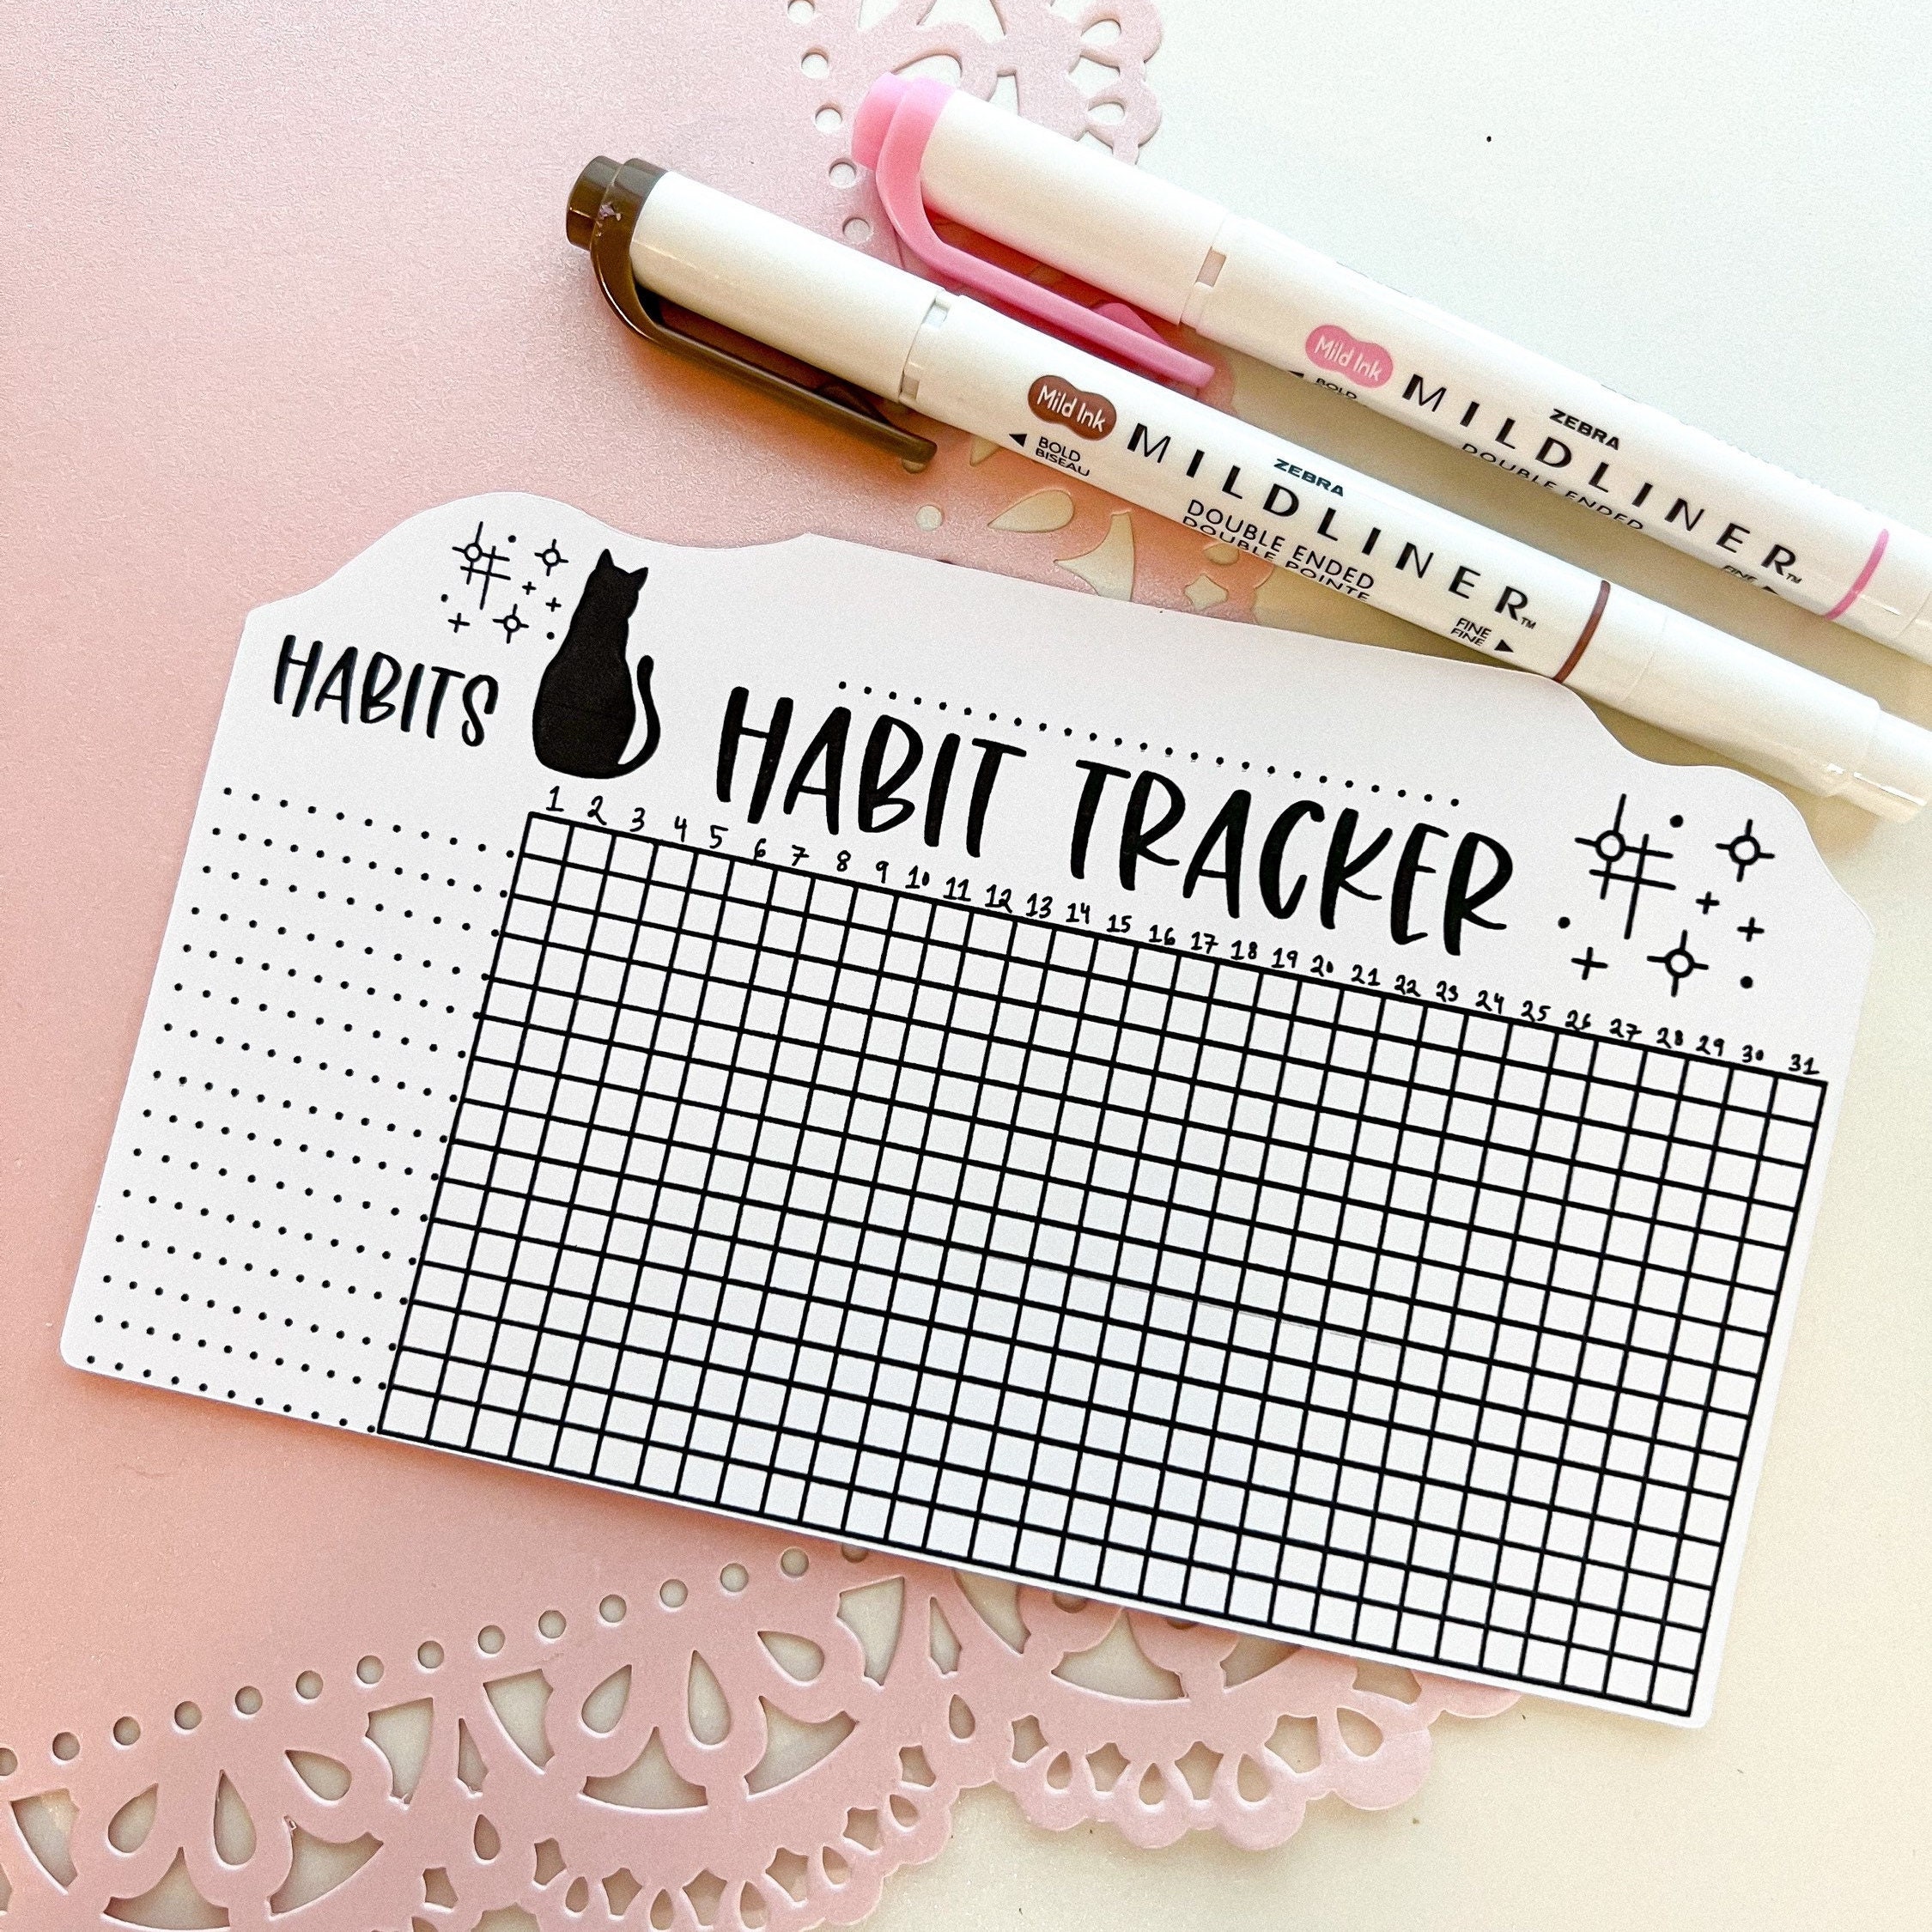 Daily Goals Habit Tracker Stamp